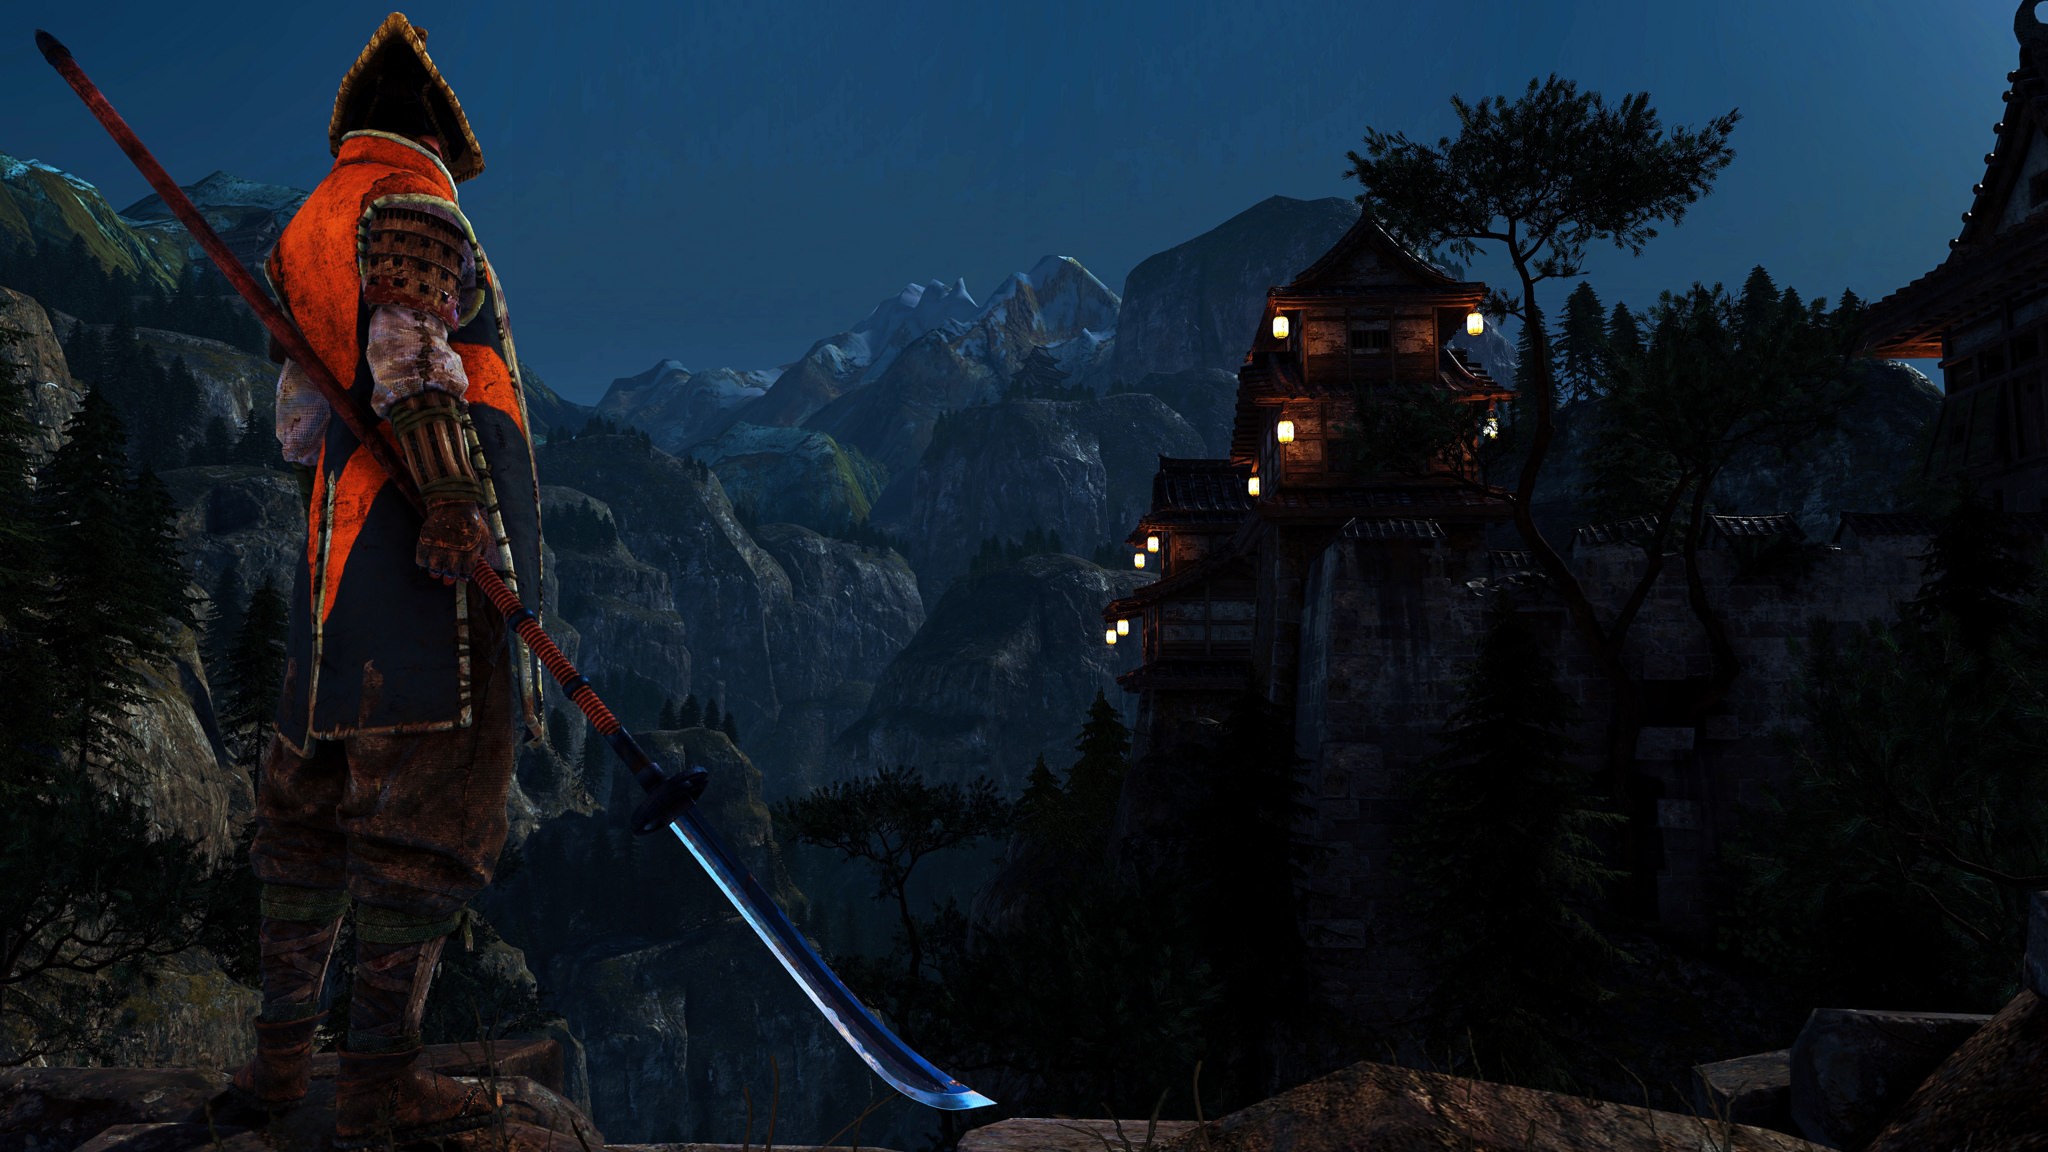 General 2048x1152 For Honor blades samurai screen shot landscape video games Ubisoft